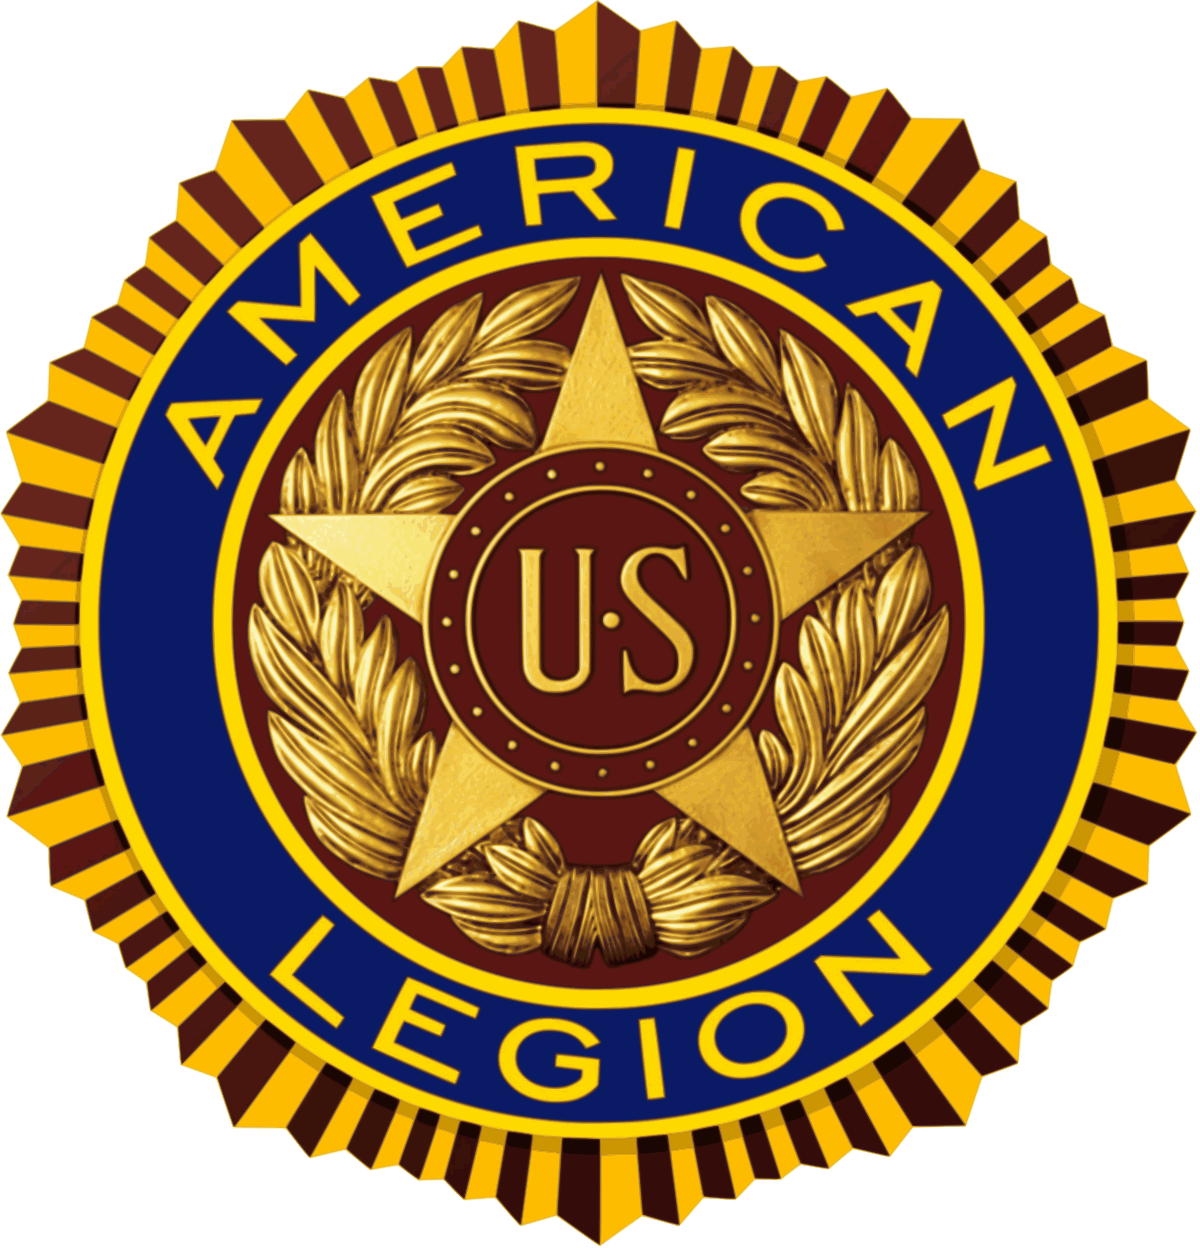 American Legion mission statement